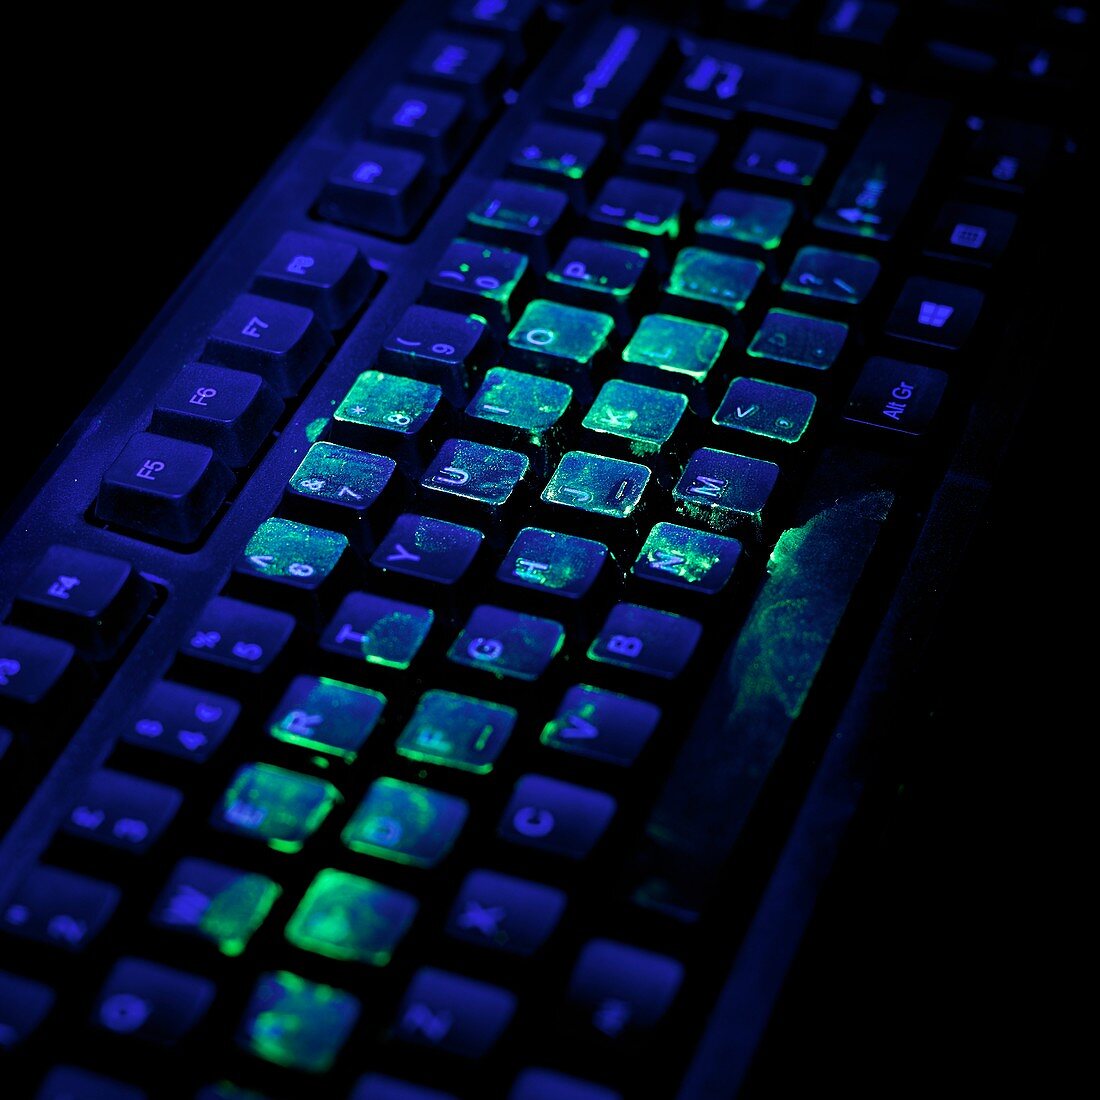 UV light showing bacteria on keyboard